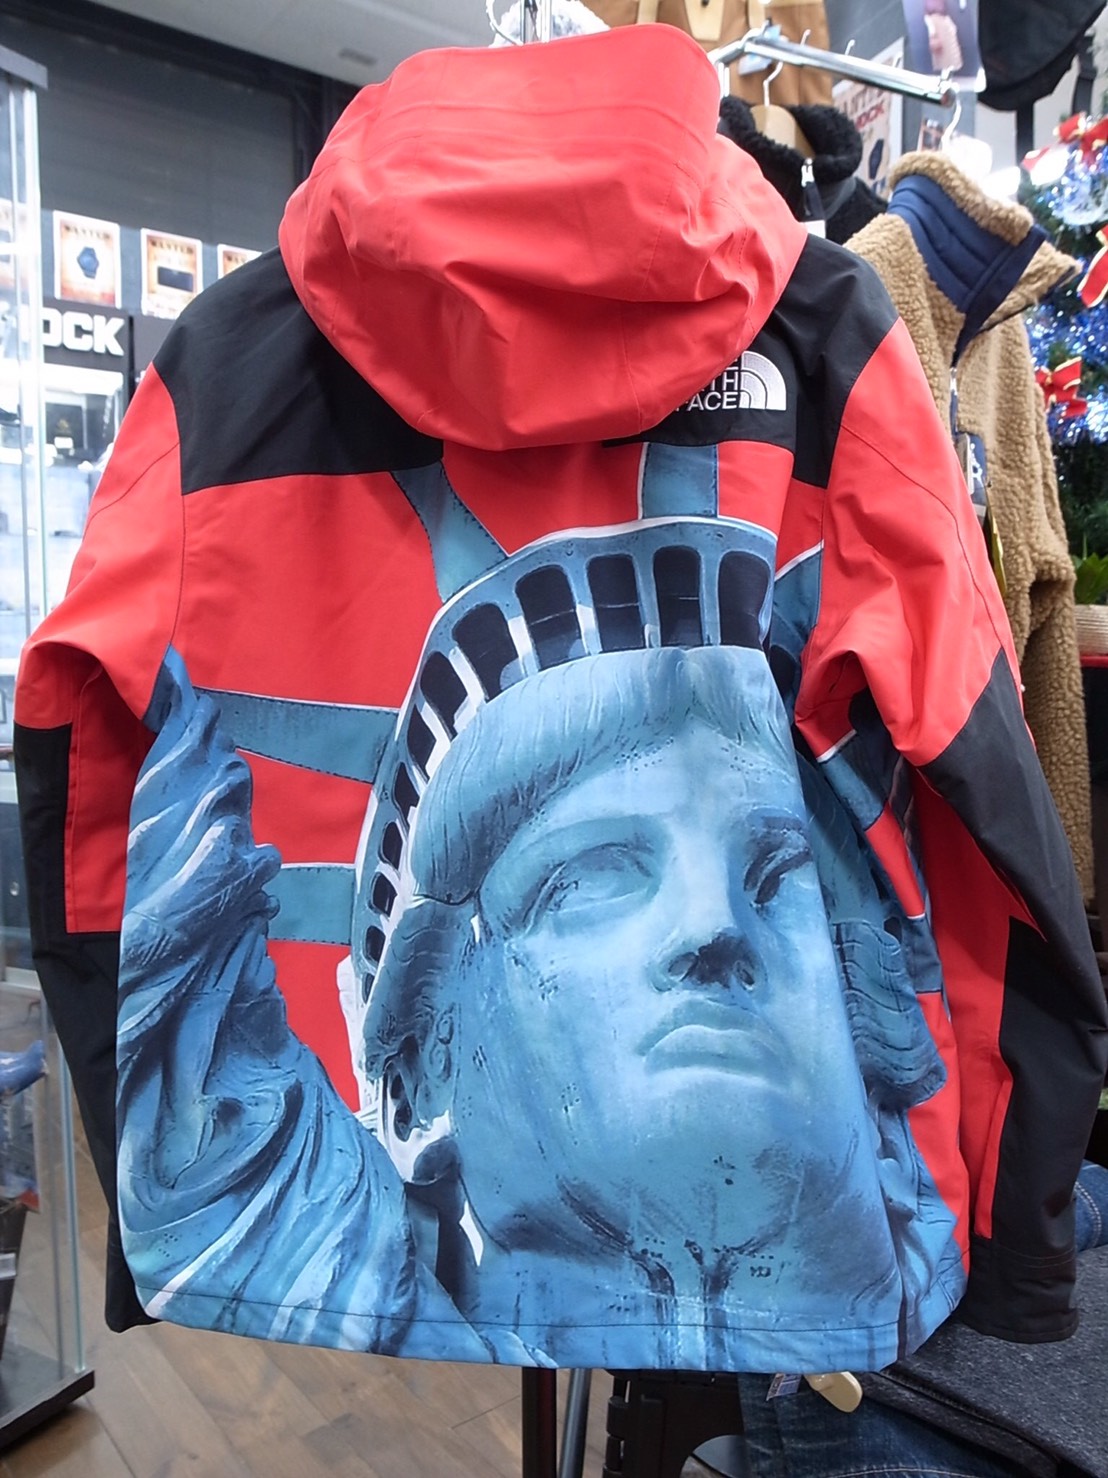 Statue of Liberty Mountain Jacket